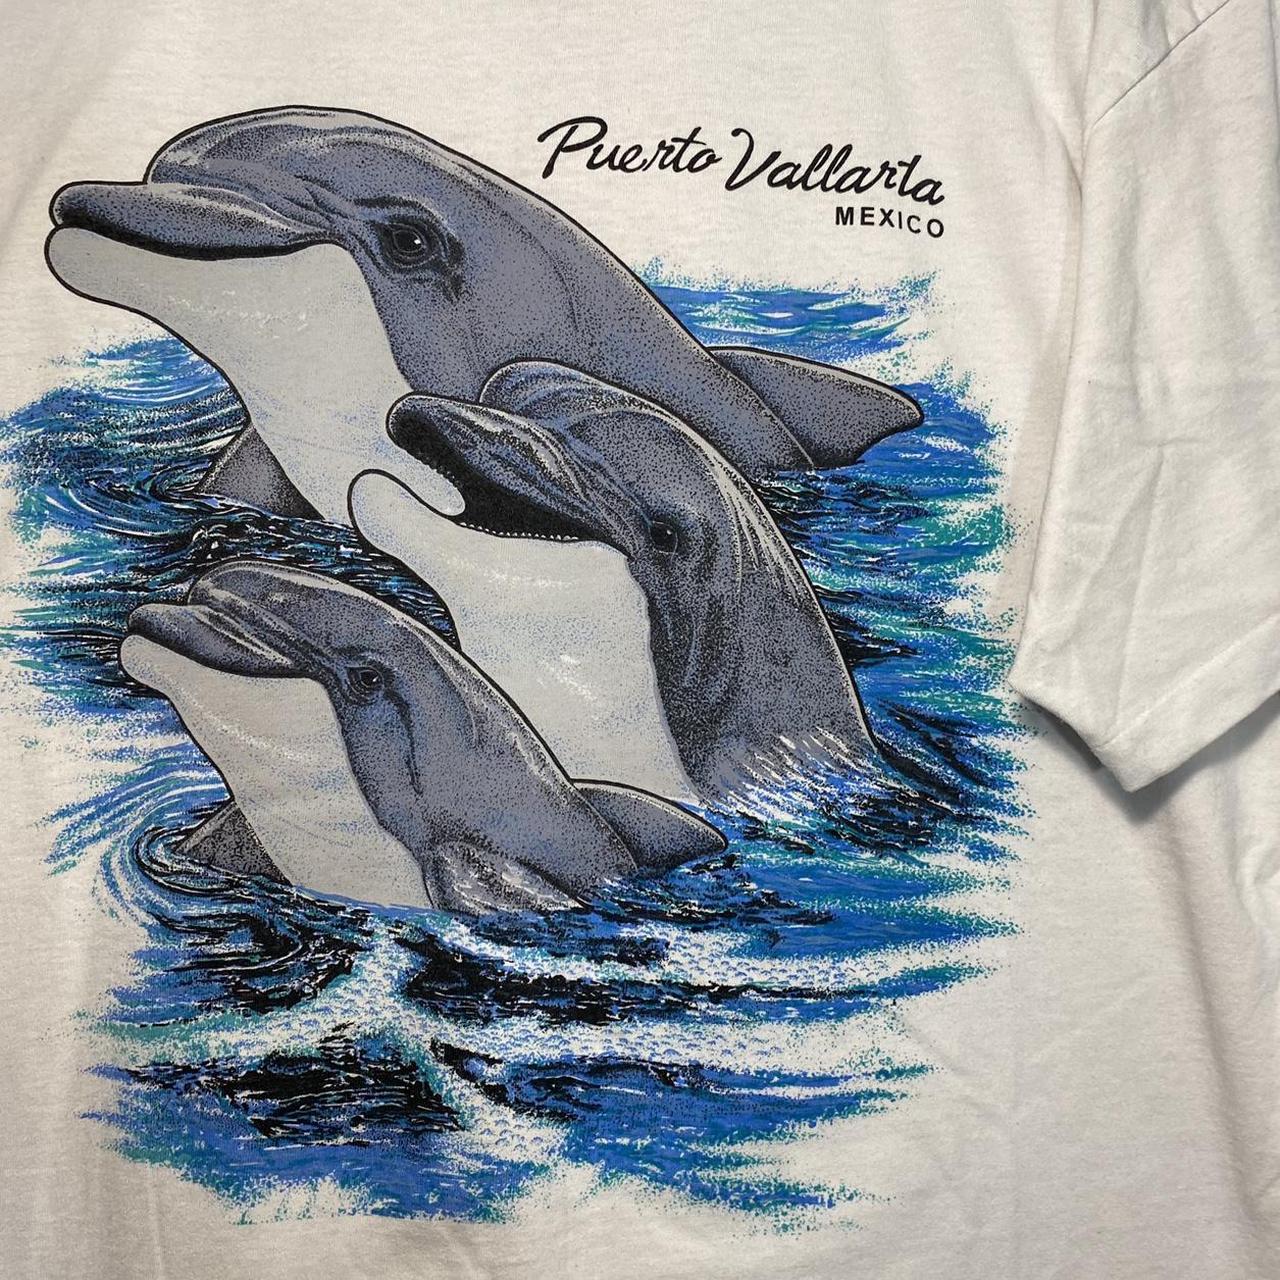 Vintage Dolphin T-Shirt, Puerto Vallarta Mexico